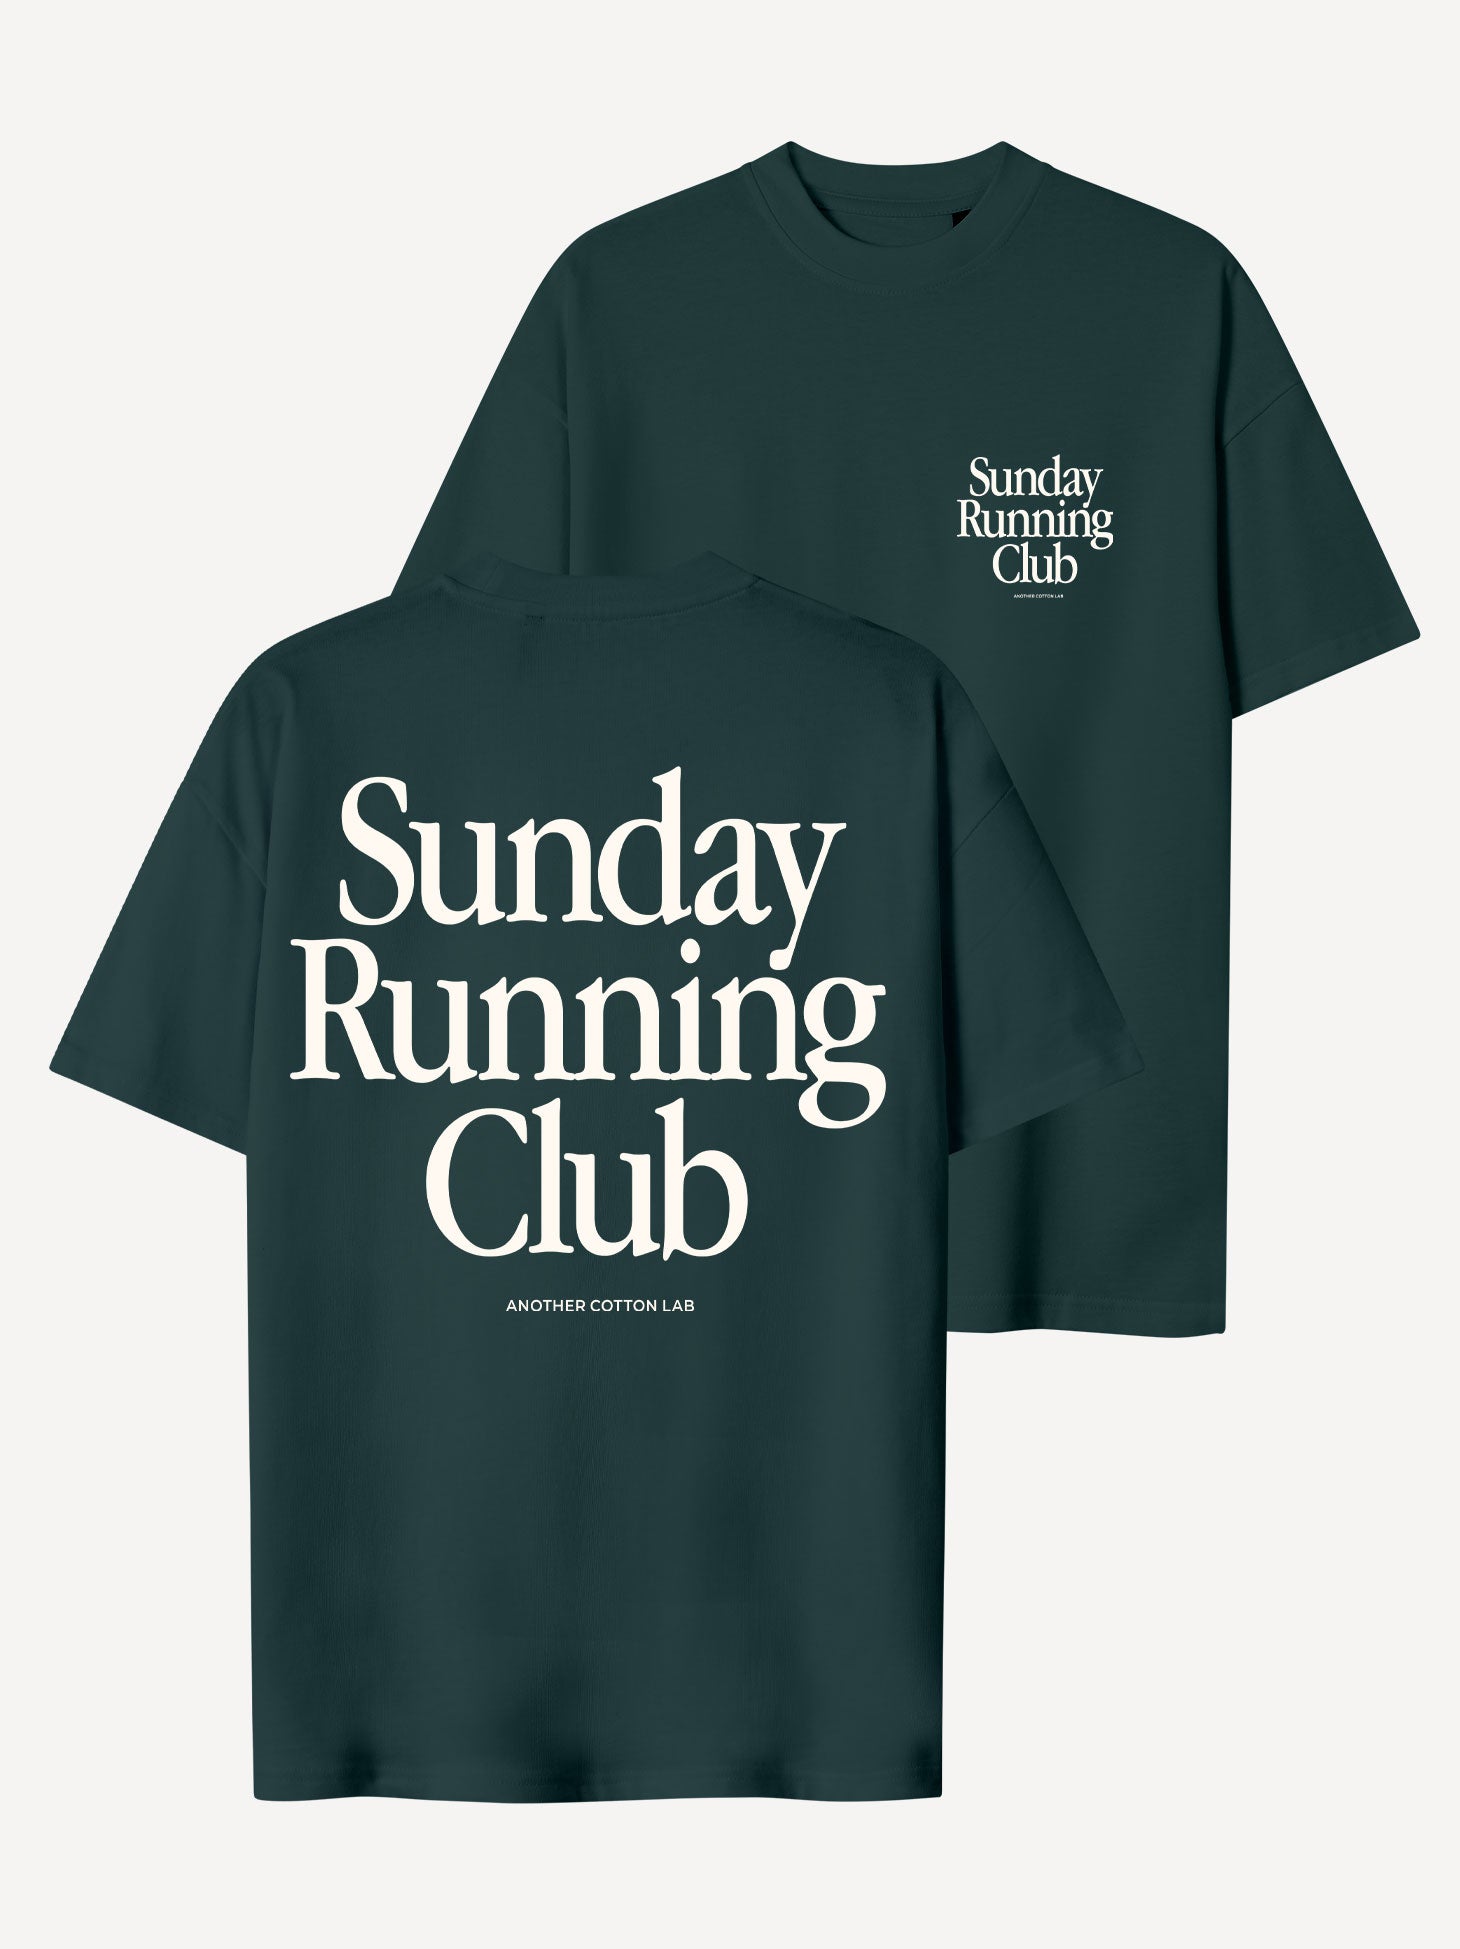 Sunday Running Club T-Shirt – AnotherCottonLab